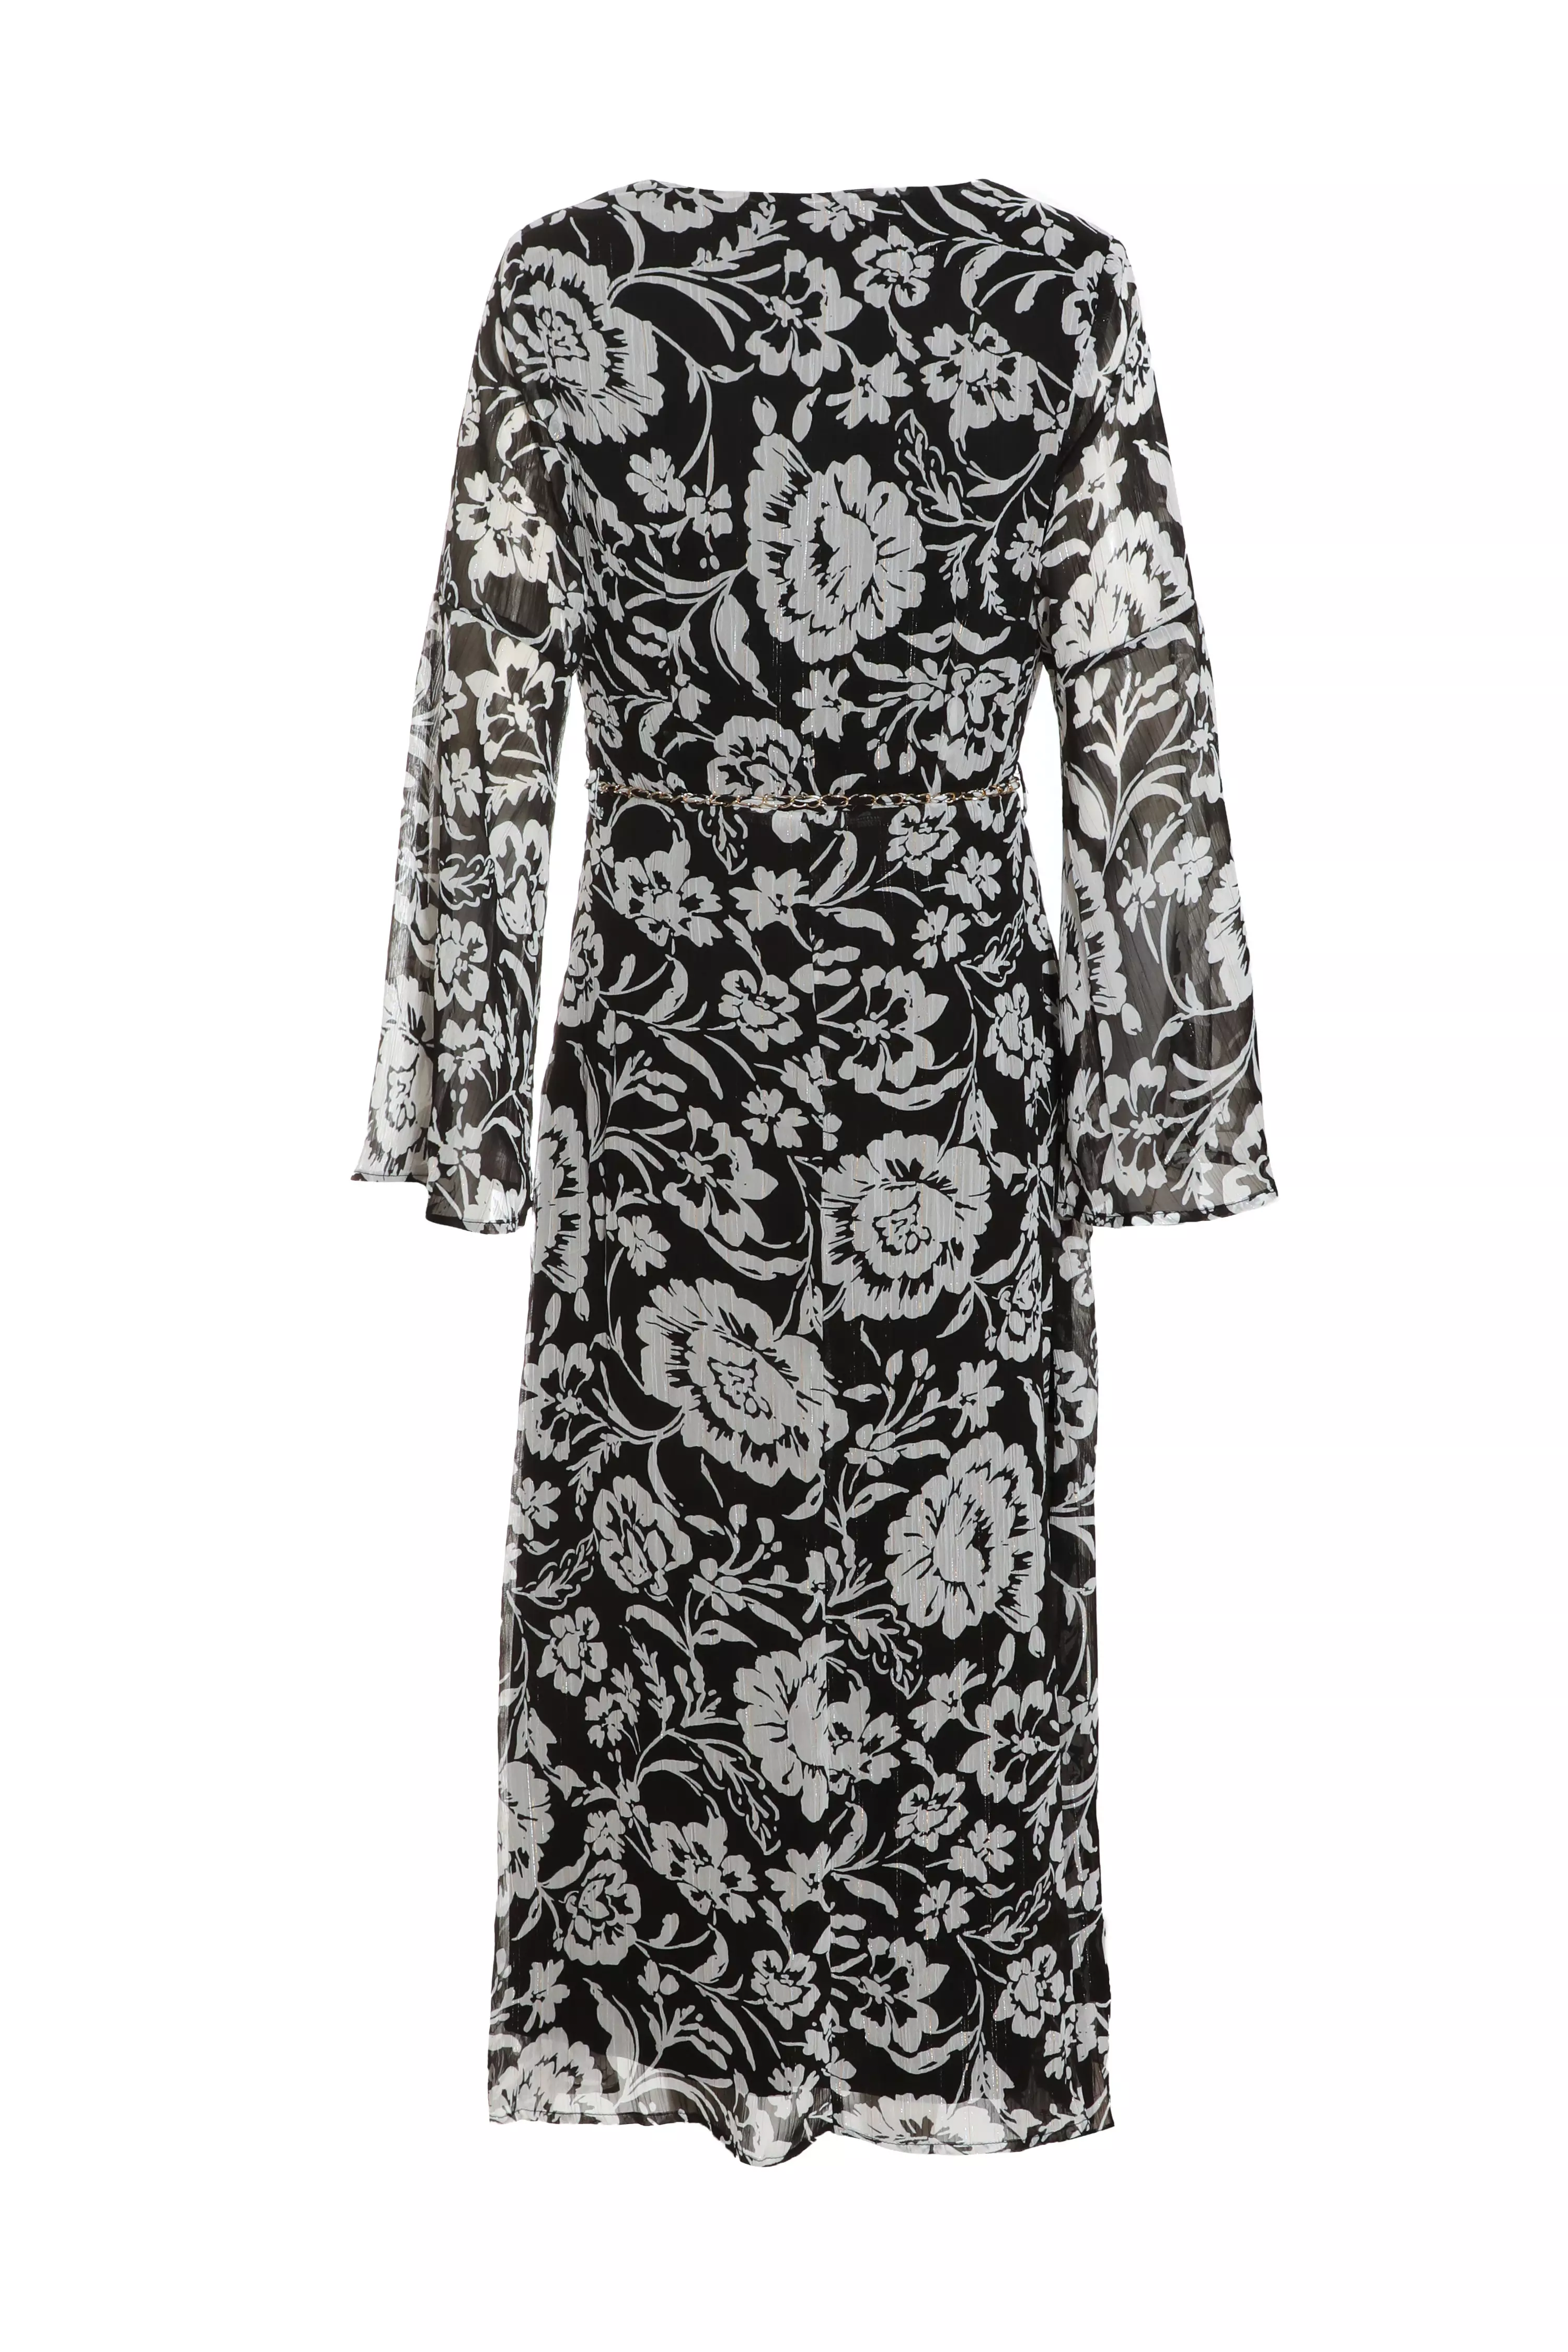 Black Floral Chiffon Wrap Midi Dress - QUIZ Clothing